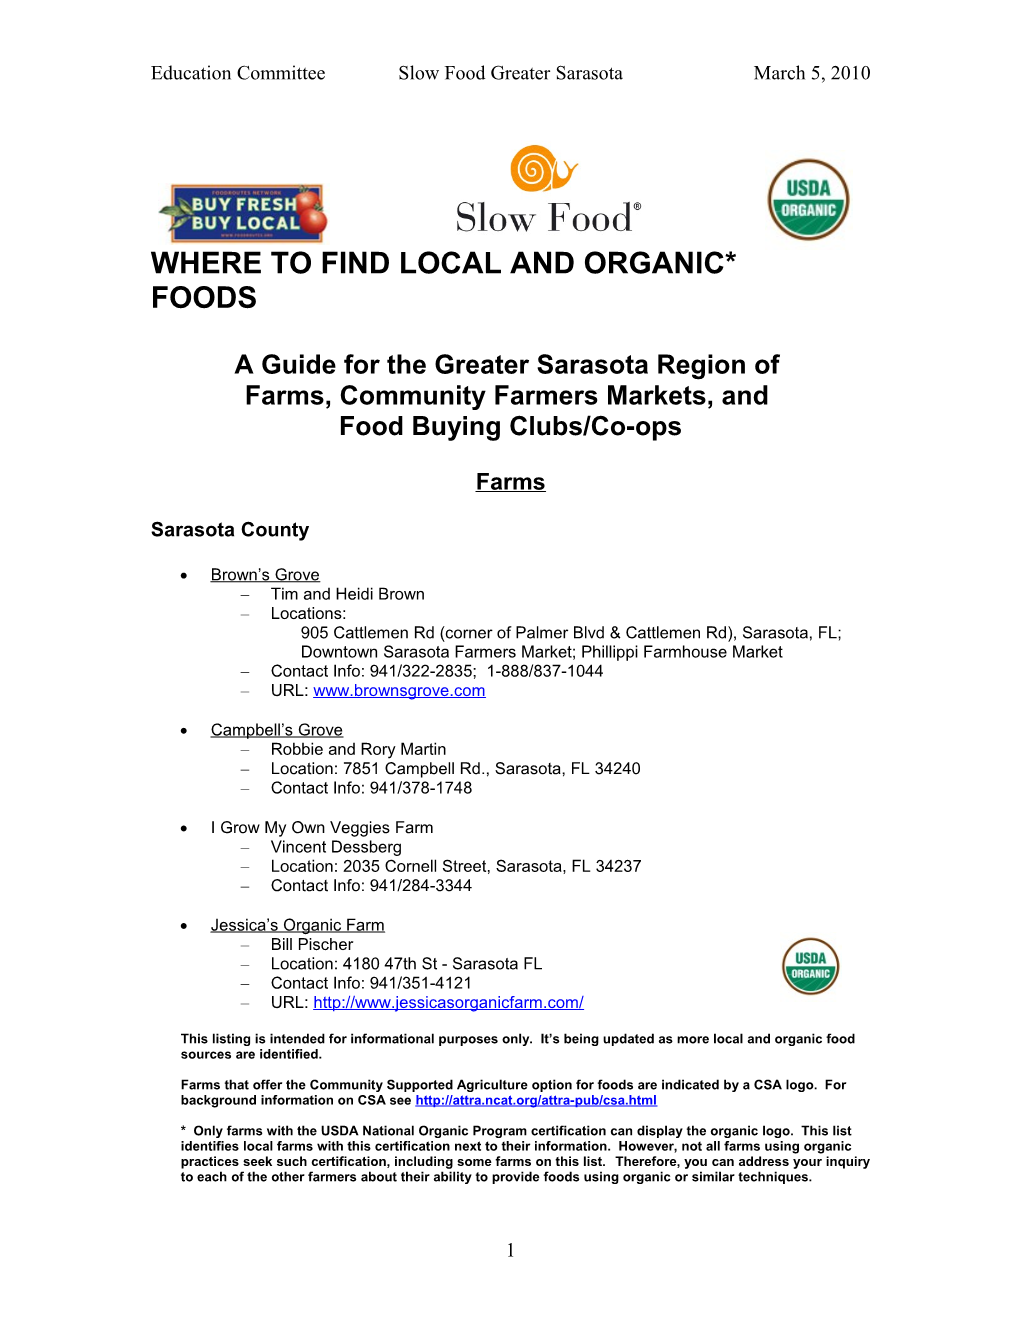 Organic Foods Presentation References